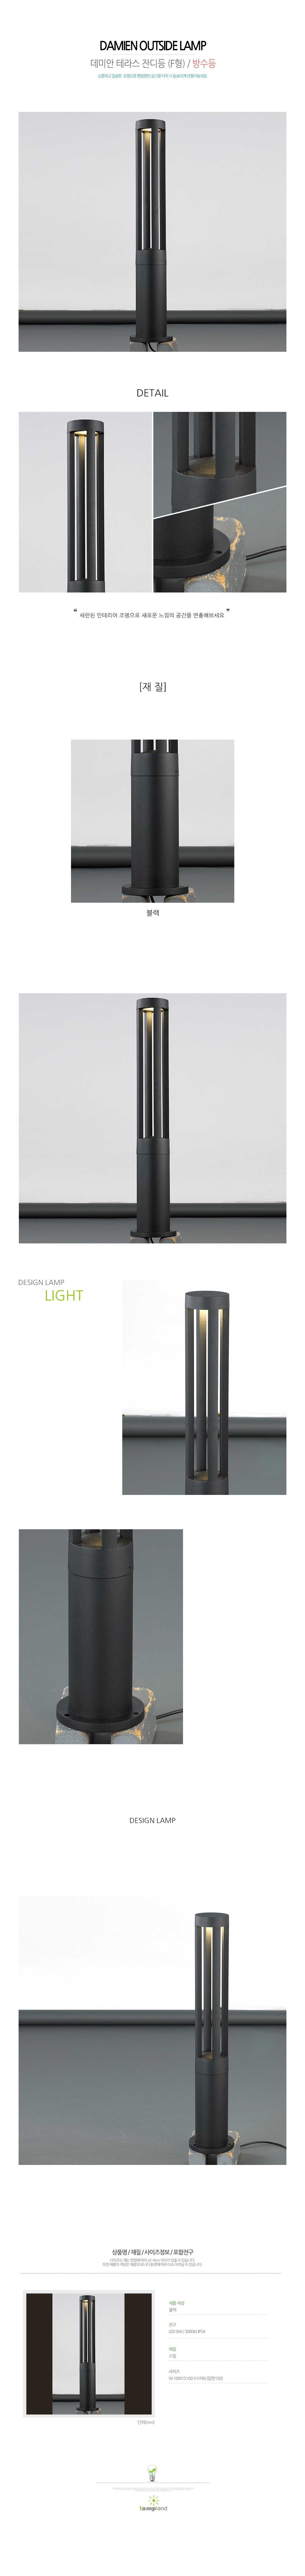 [LED 9W] 데미안 원형 테라스 램프 / 방수등